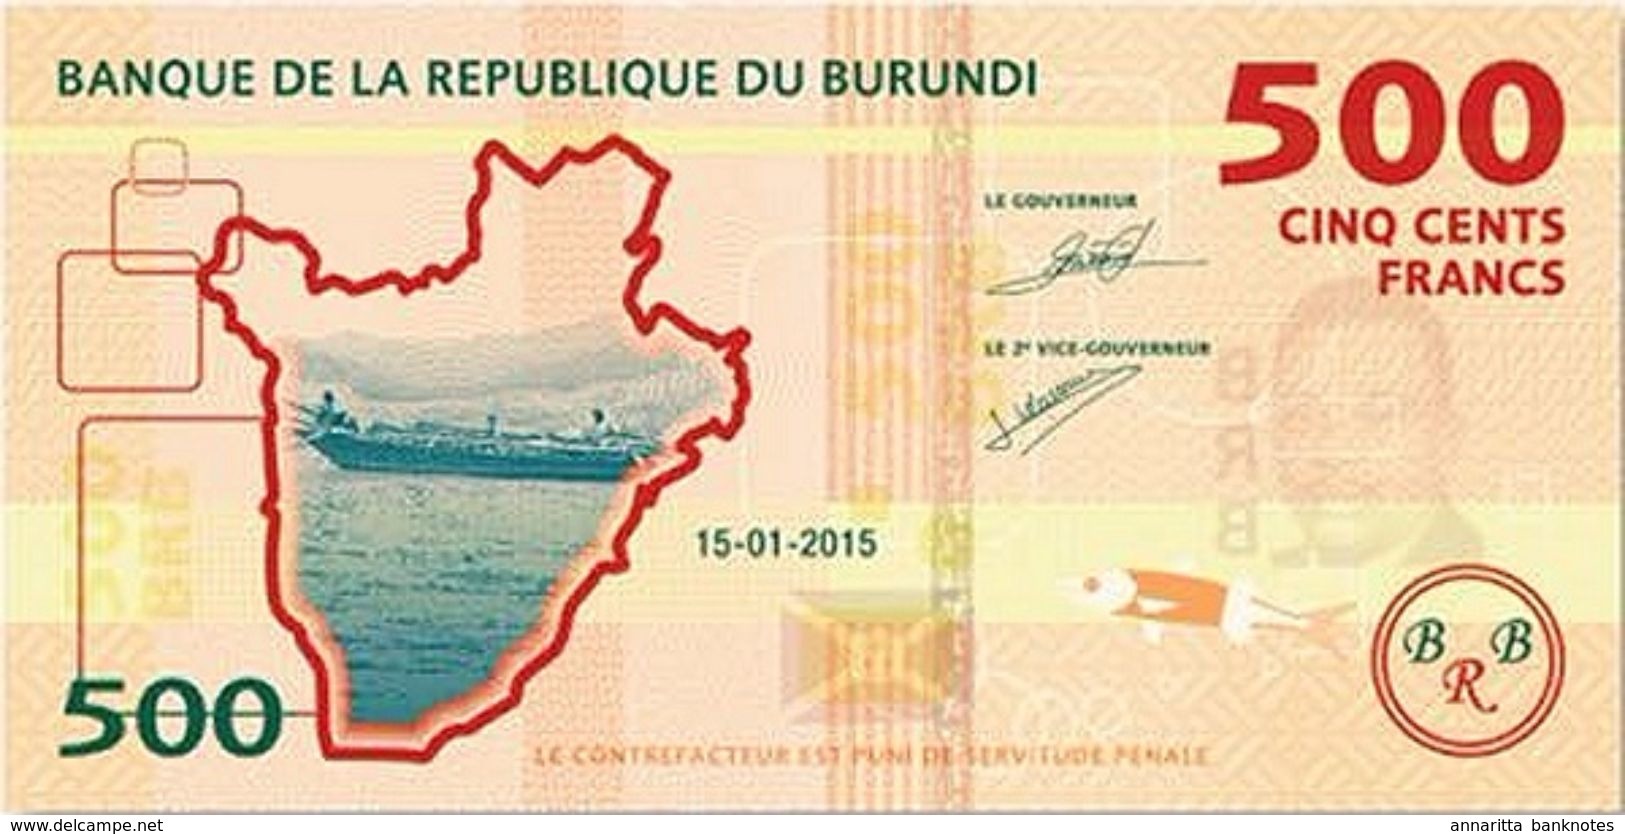 BURUNDI 500 FRANCS 2015 P-50a UNC [BI236a] - Burundi